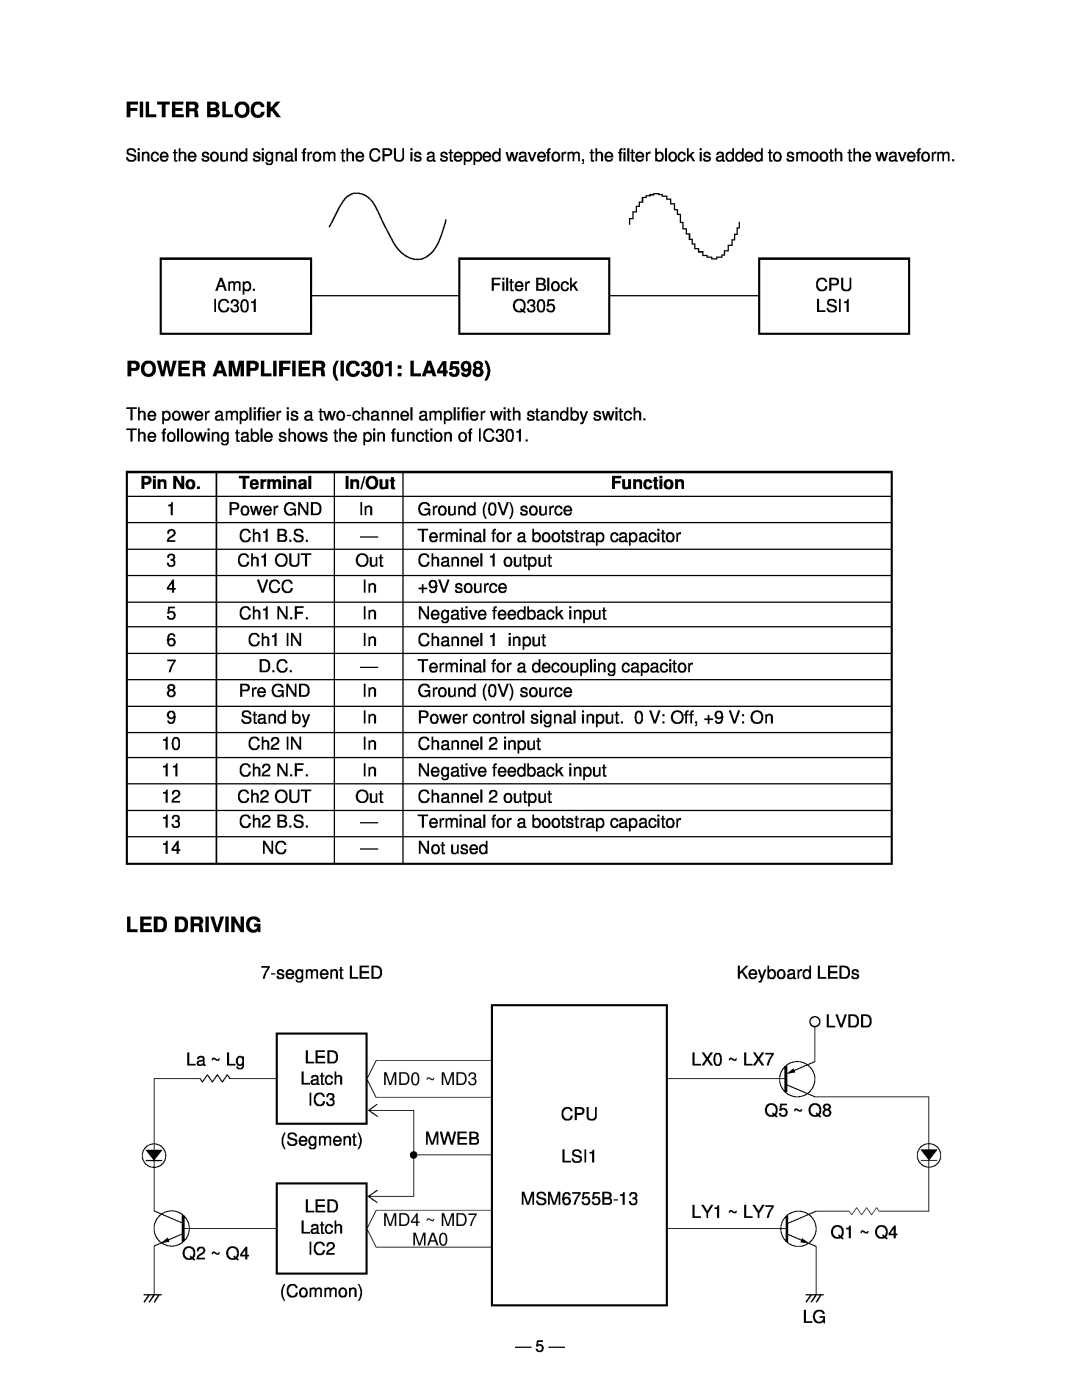 Casio CTK-220L manual Filter Block, POWER AMPLIFIER IC301 LA4598, Led Driving, Mweb 